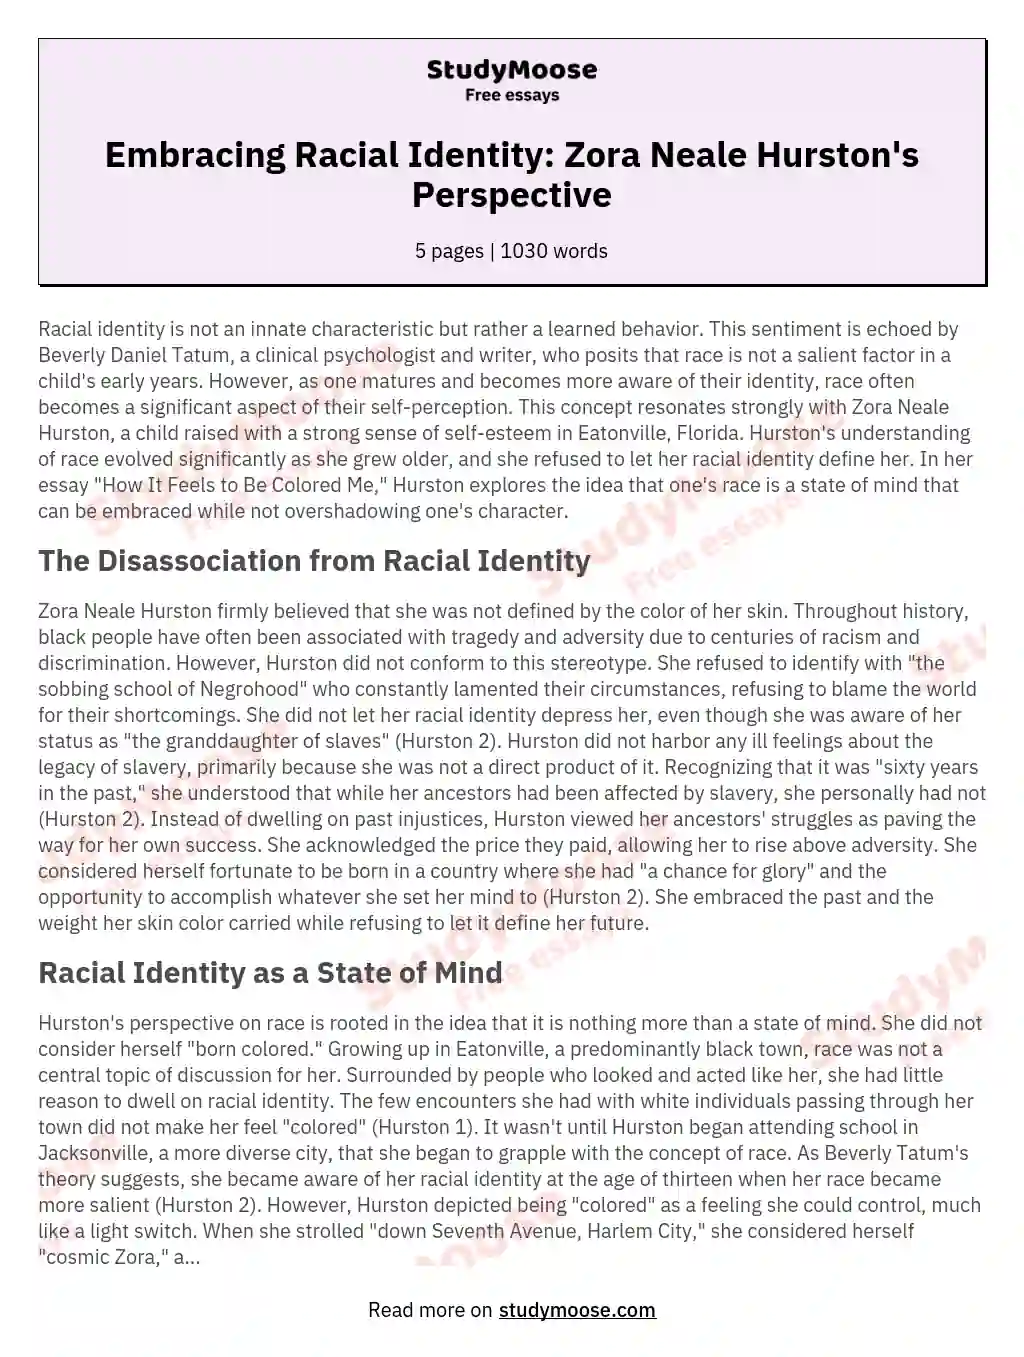 Embracing Racial Identity: Zora Neale Hurston's Perspective essay